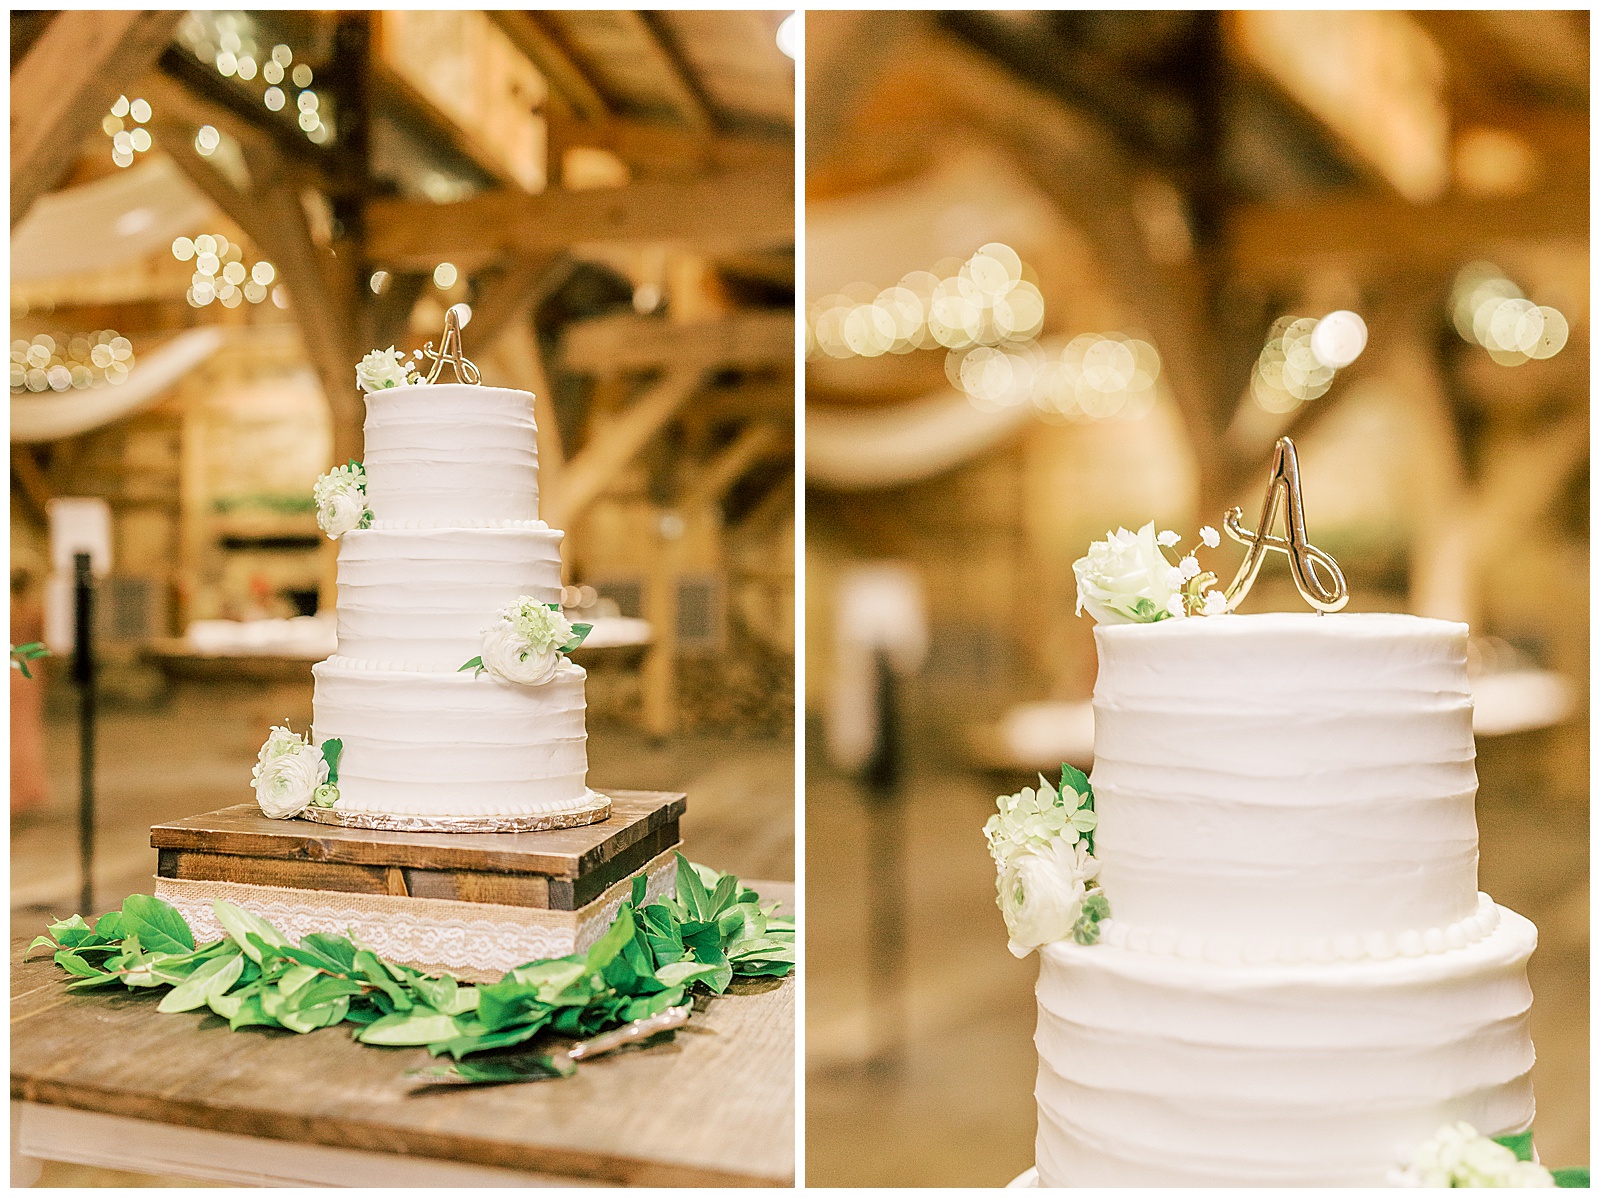 three tiered white cake at indoor summer wedding reception in wooden barn